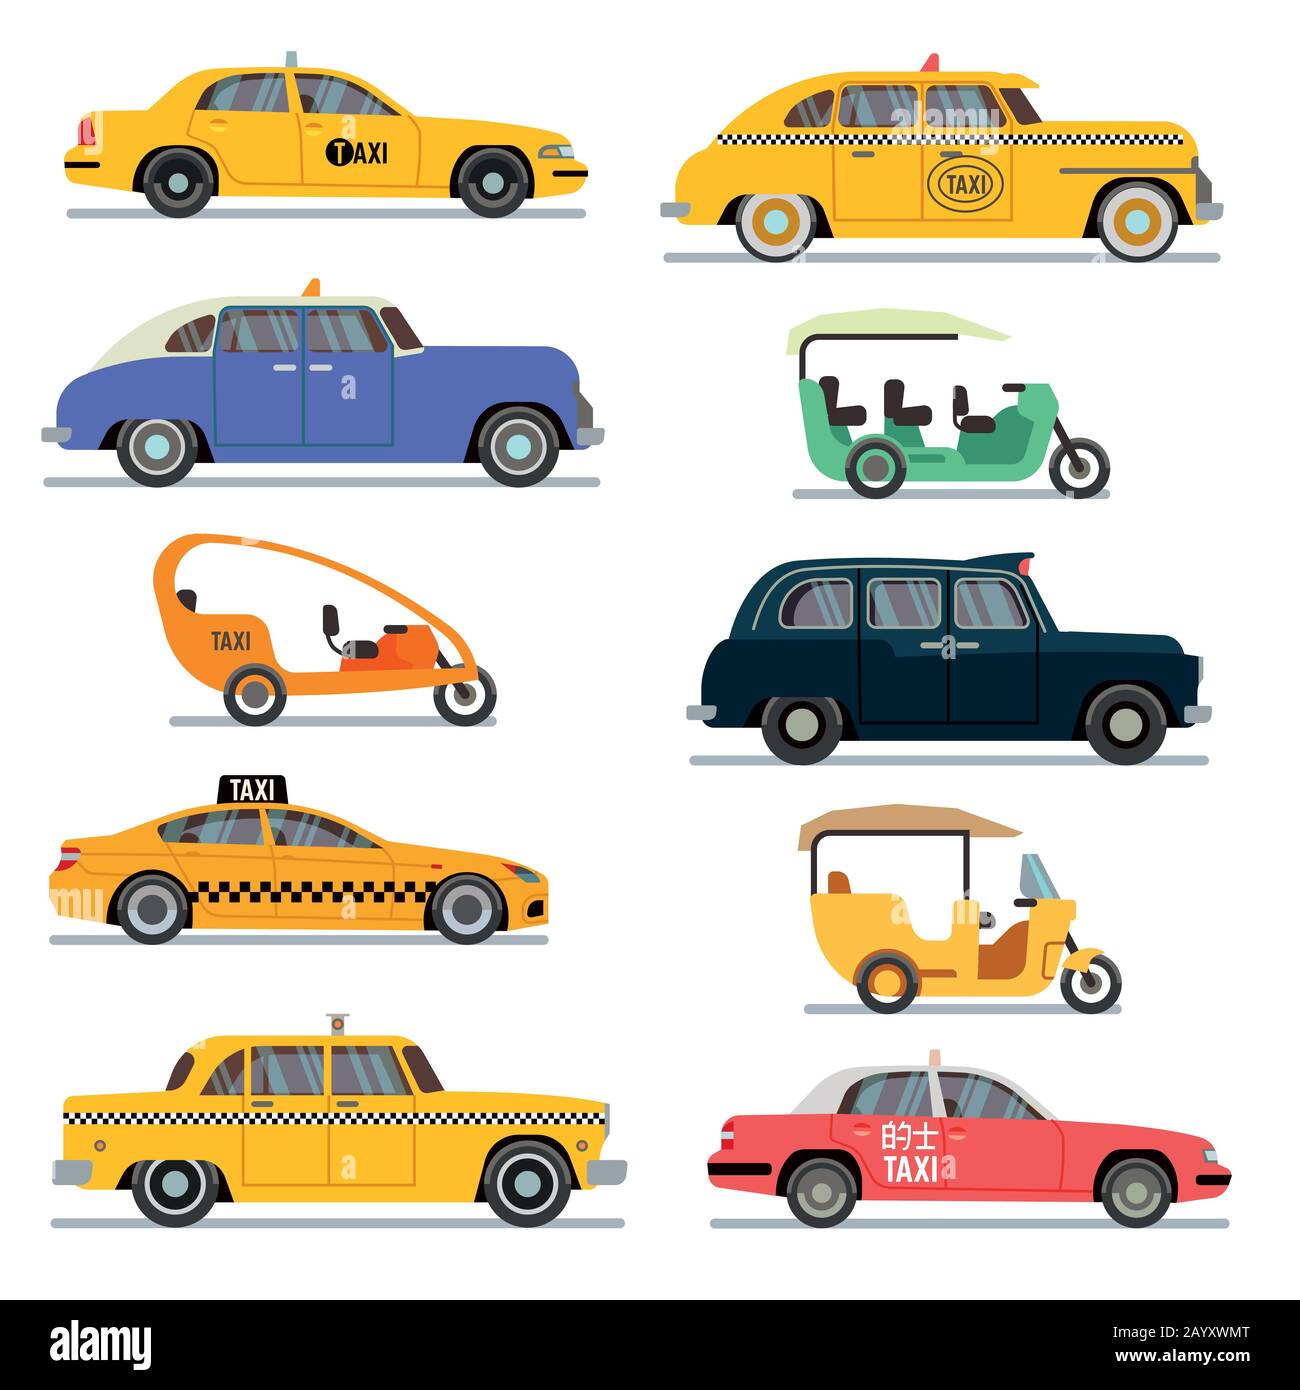 Weltberühmte Taxiwagen. Satz verschiedener Taxifahrzeuge Vektorgrafiken Stock Vektor